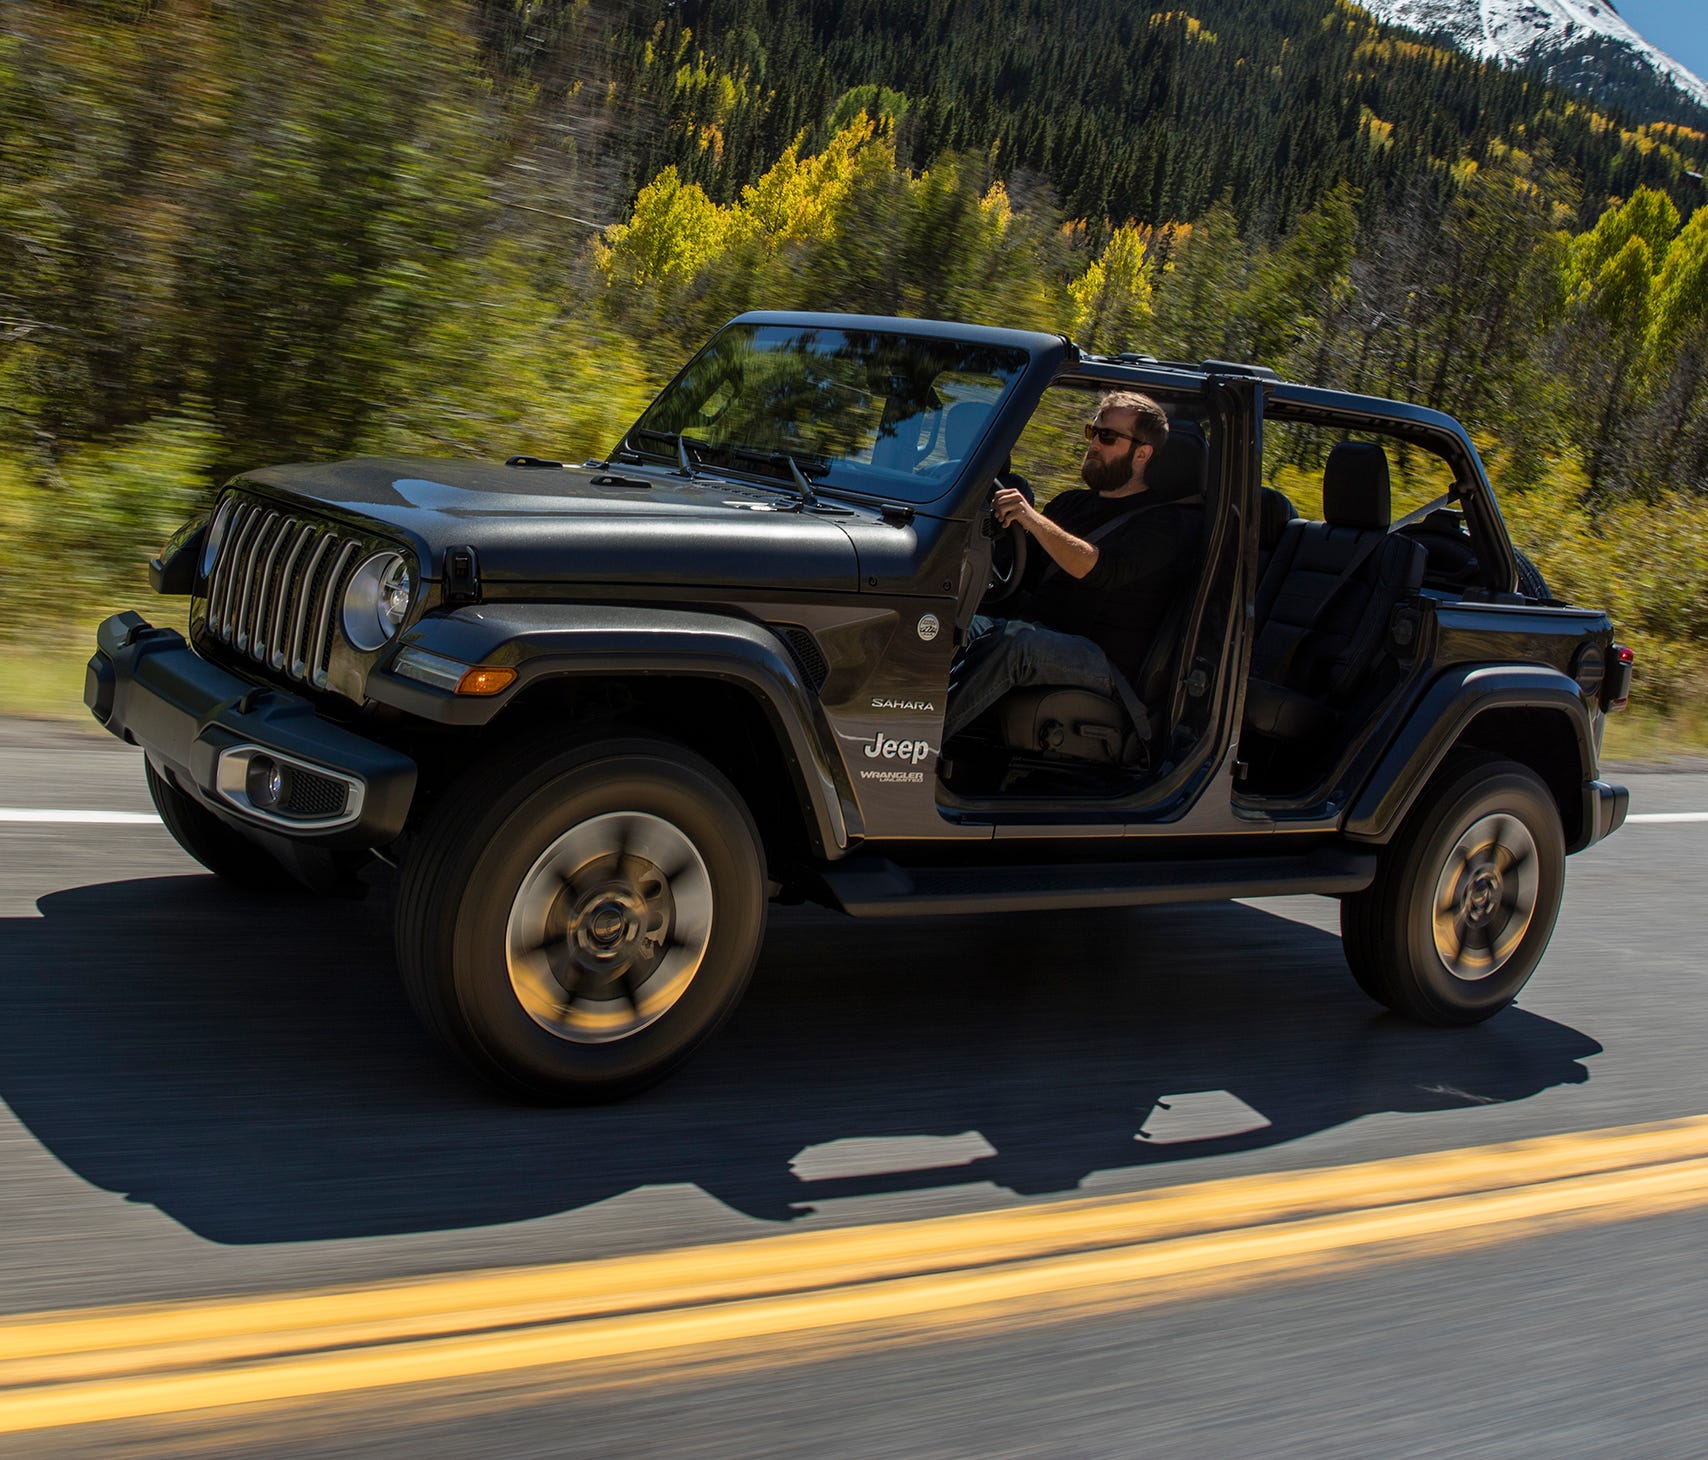 Jeep Wrangler Sahara gets an overhaul for 2018